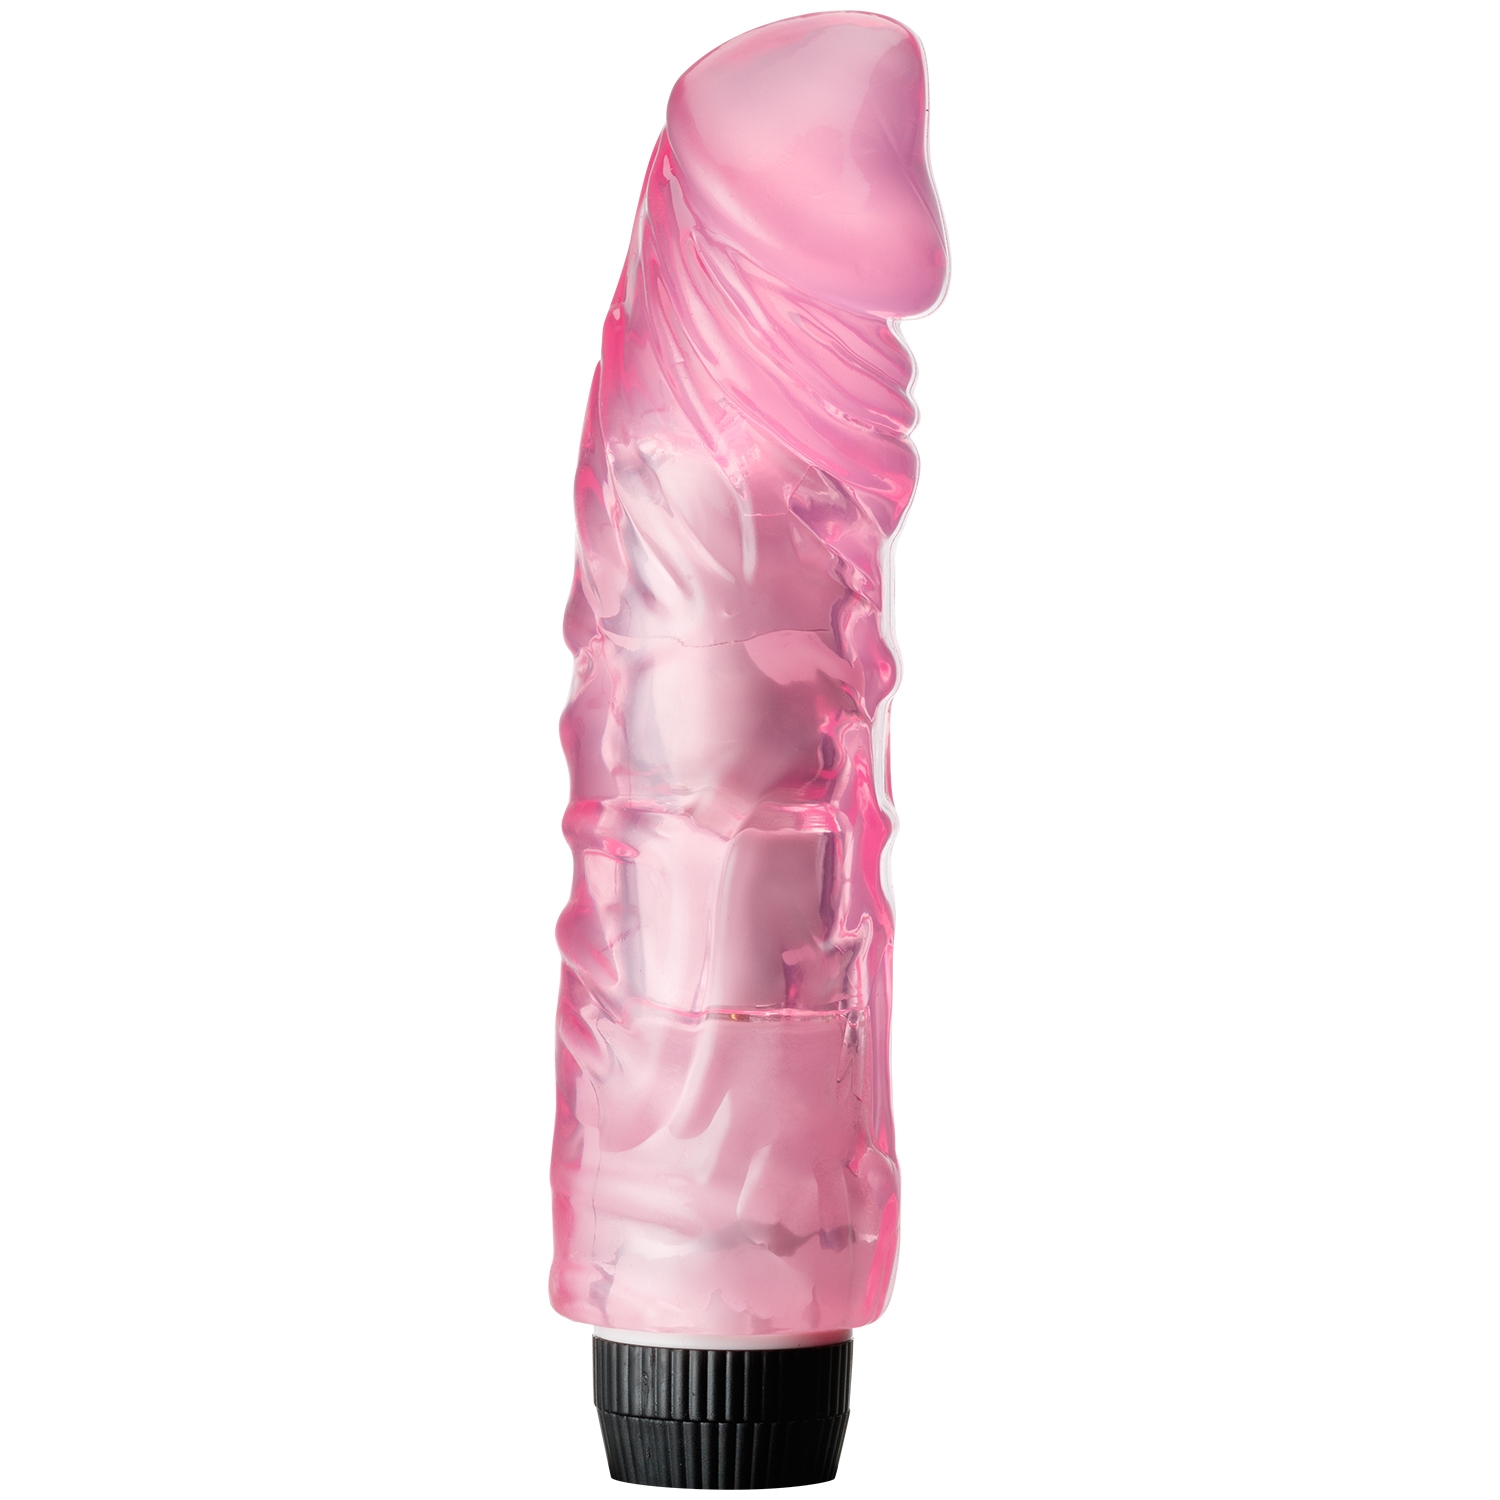 baseks Realistisk Multispeed Dildo Vibrator XL - Pink